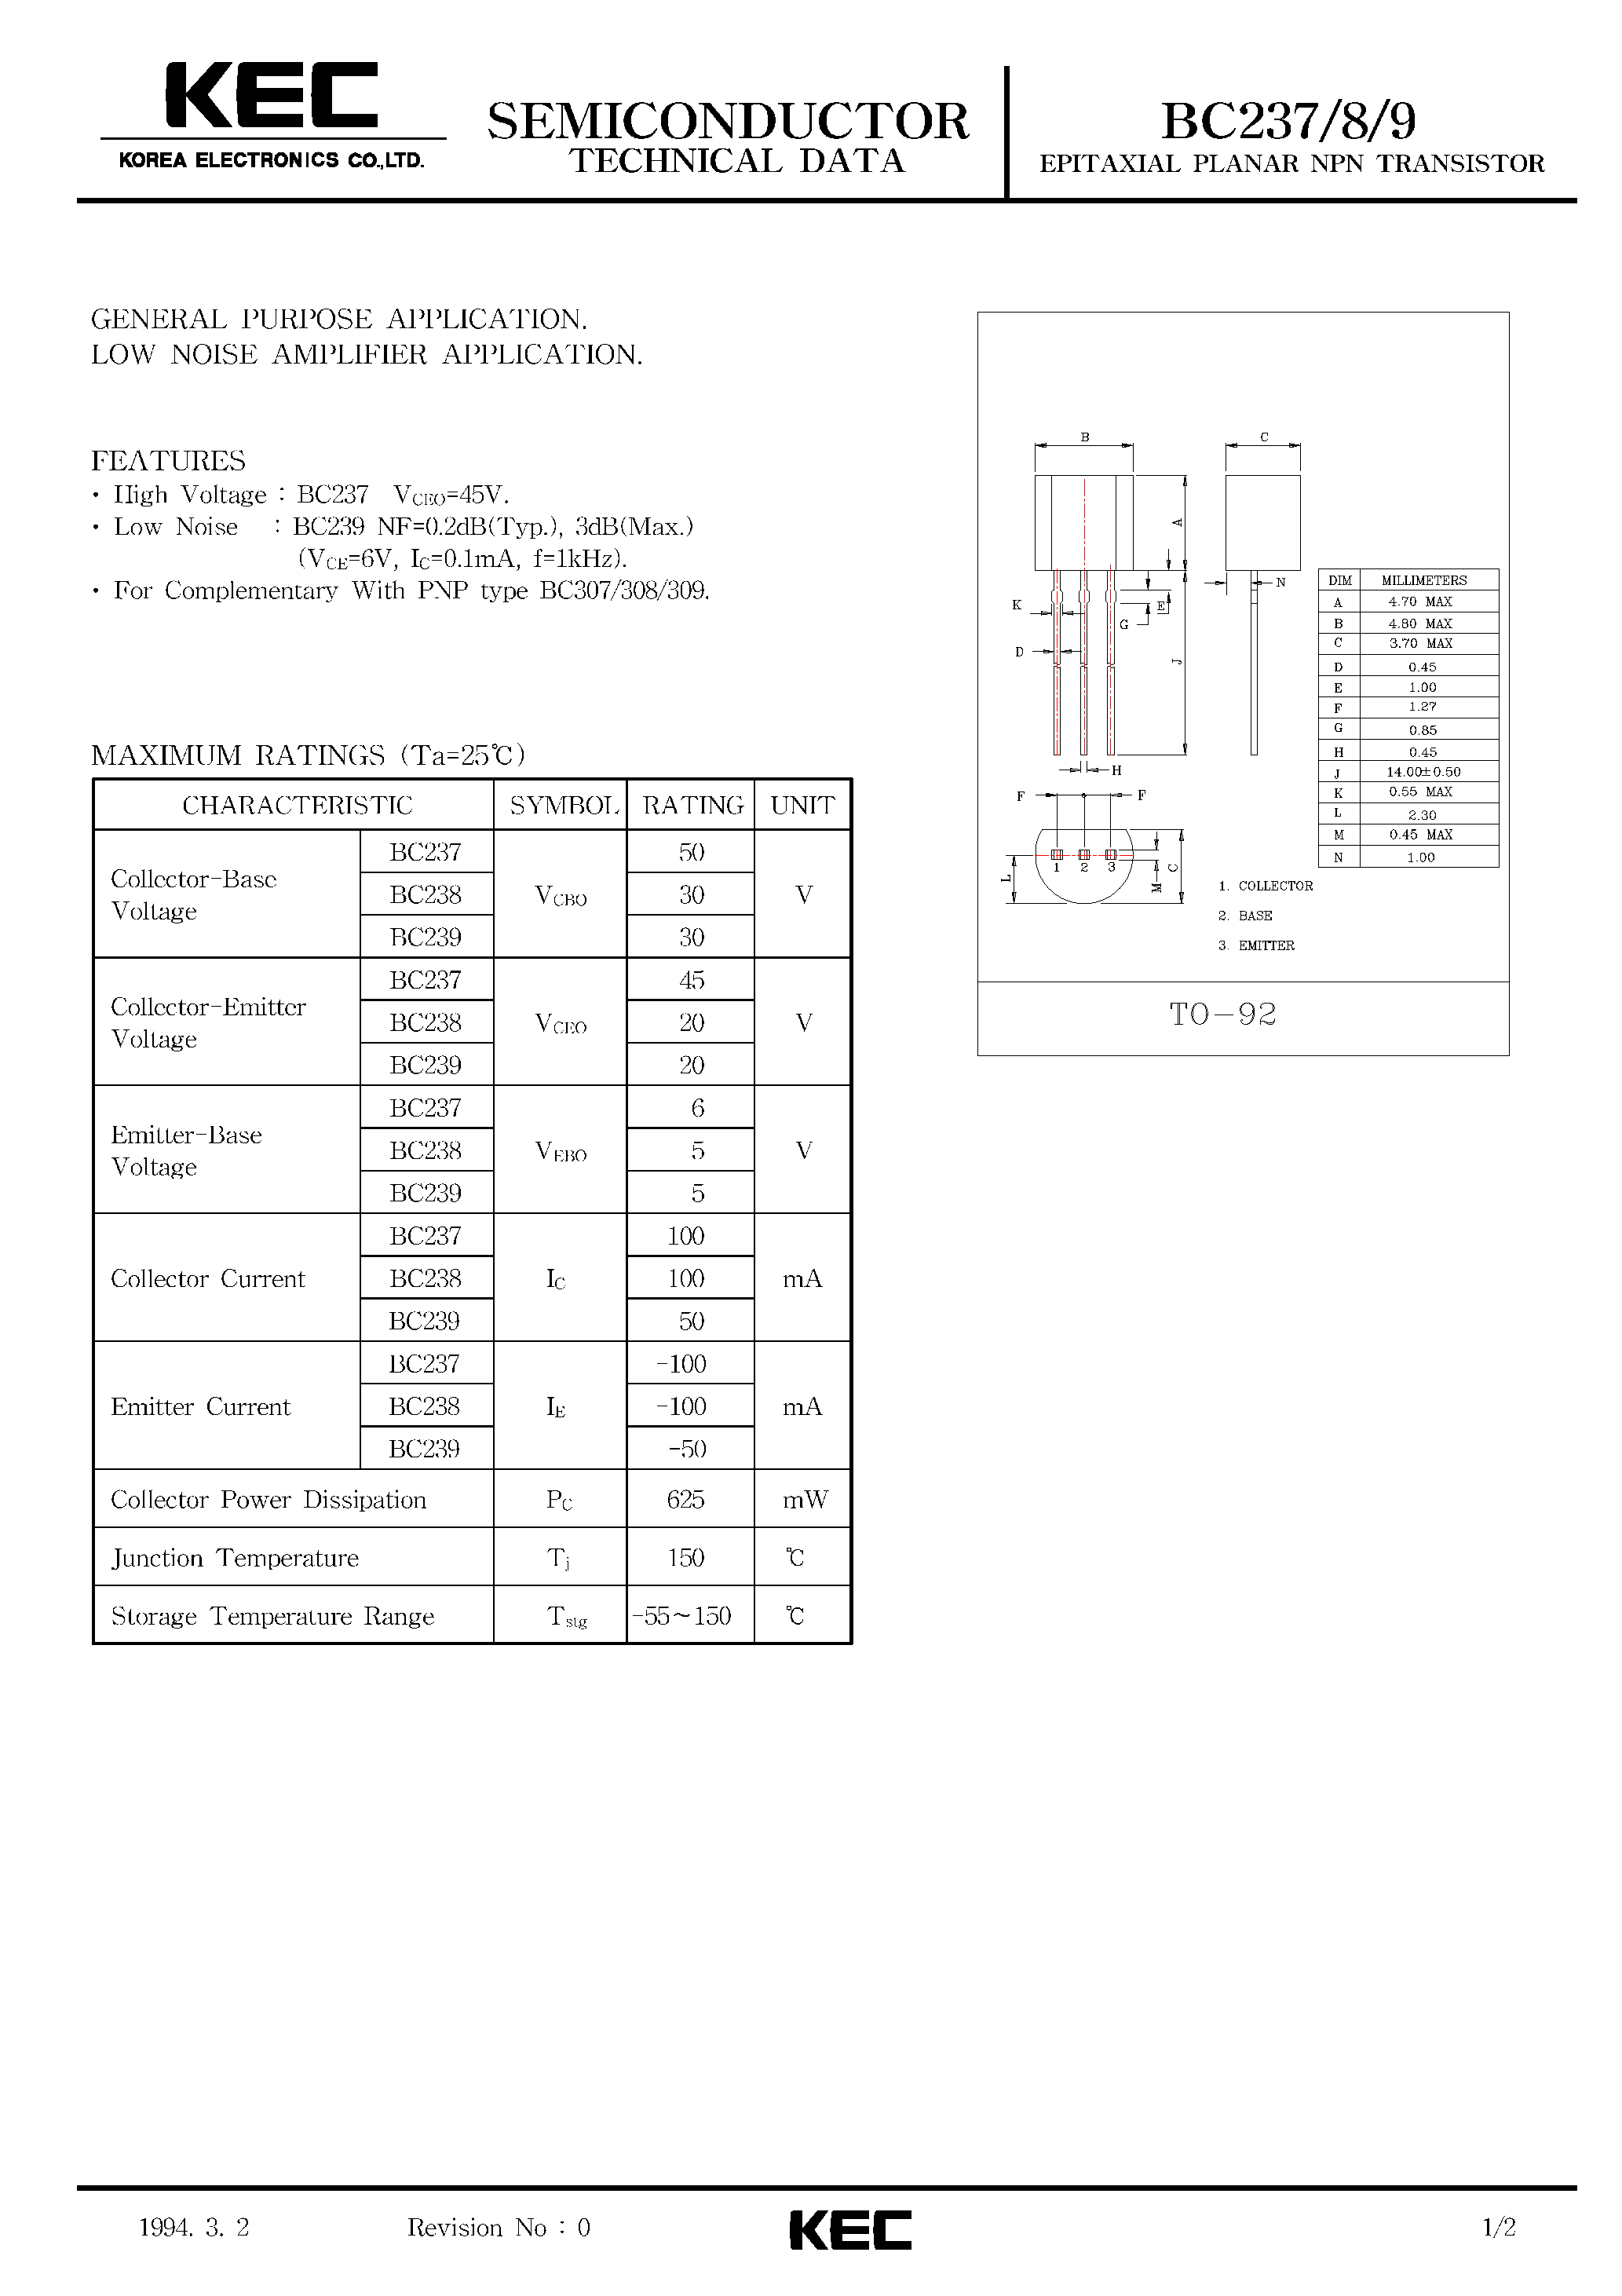 Datasheet BC238 - EPITAXIAL PLANAR NPN TRANSISTOR (GENERAL PURPOSE / LOW NOISE AMPLIFIER) page 1